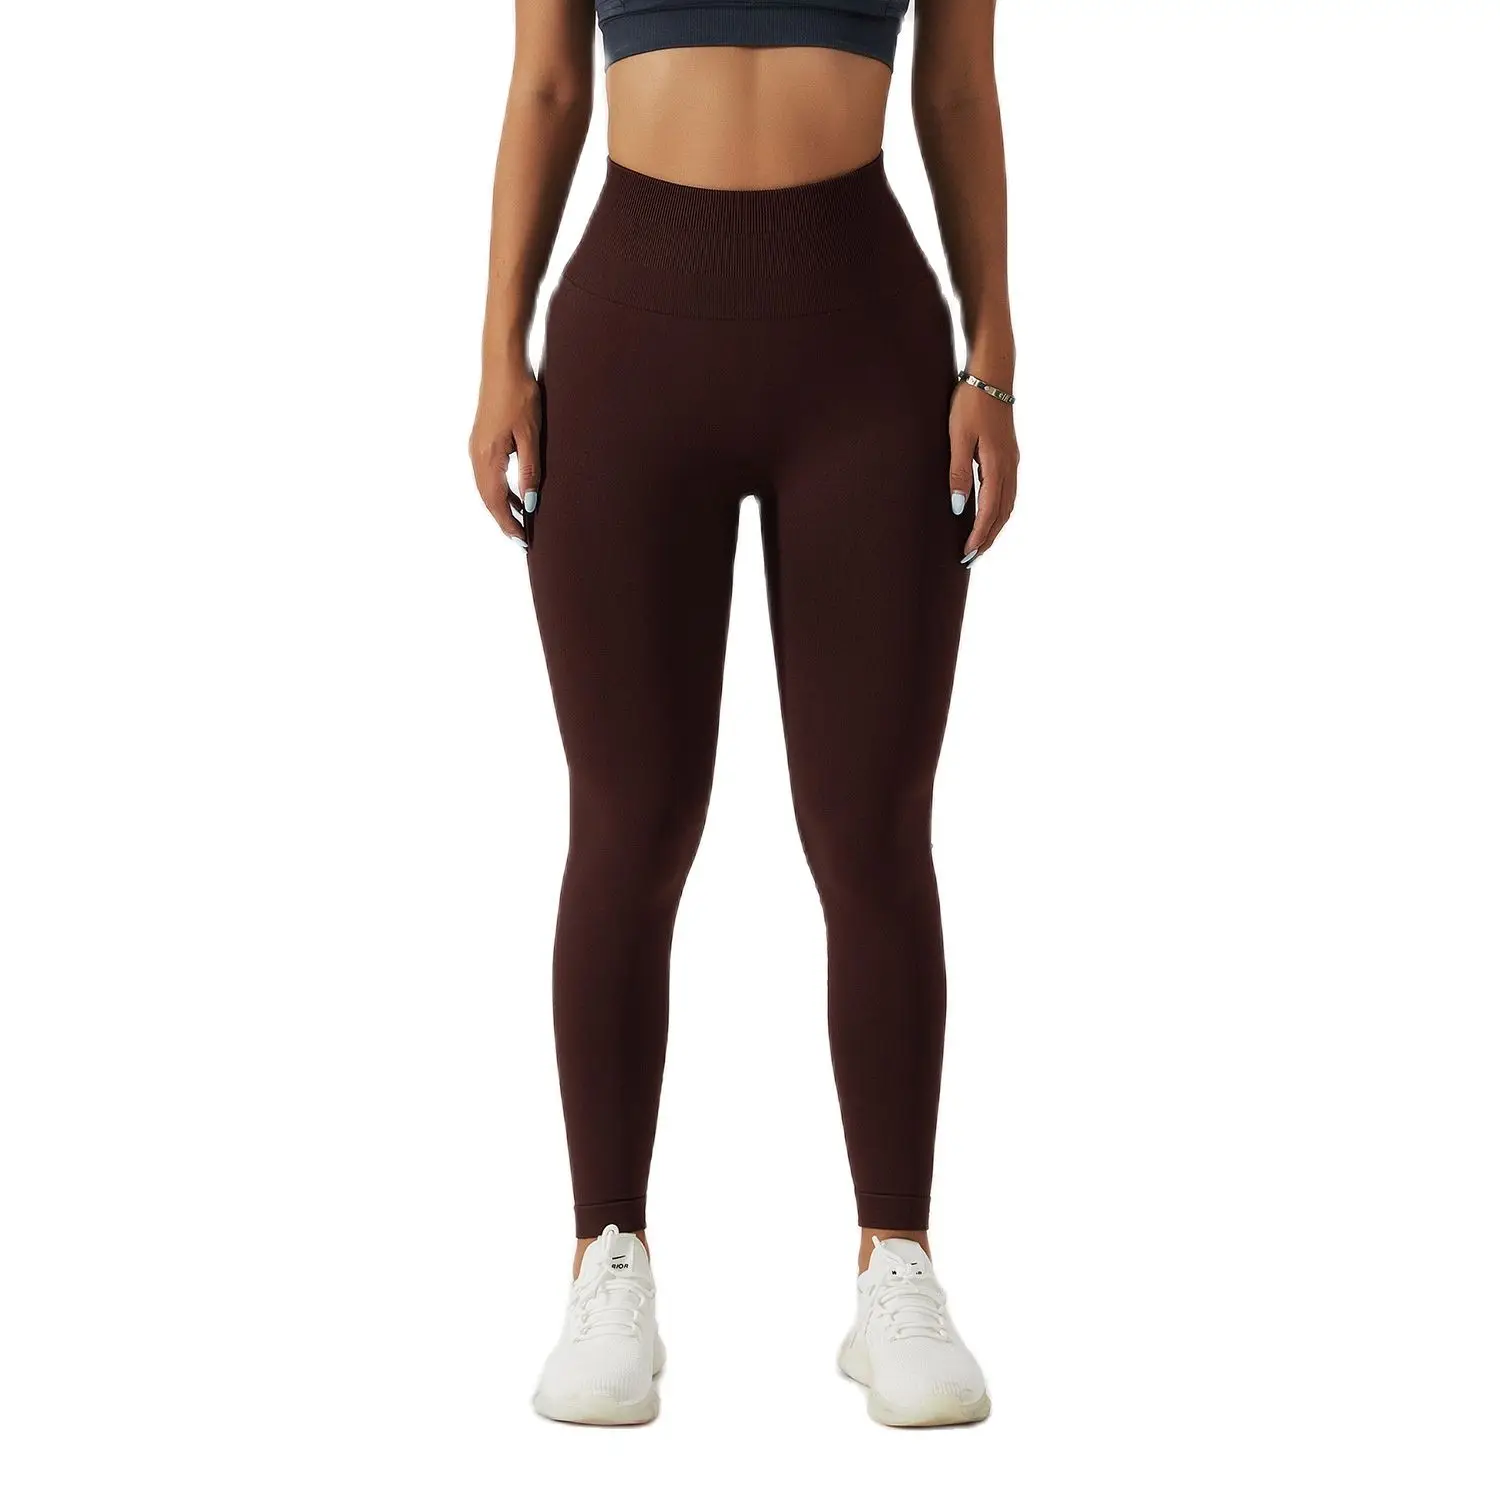 Women Super Stretchy Yoga Pants Sport Shorts High Waisted Workout Soft Women Fitness Yoga Biker Shorts Running Wear